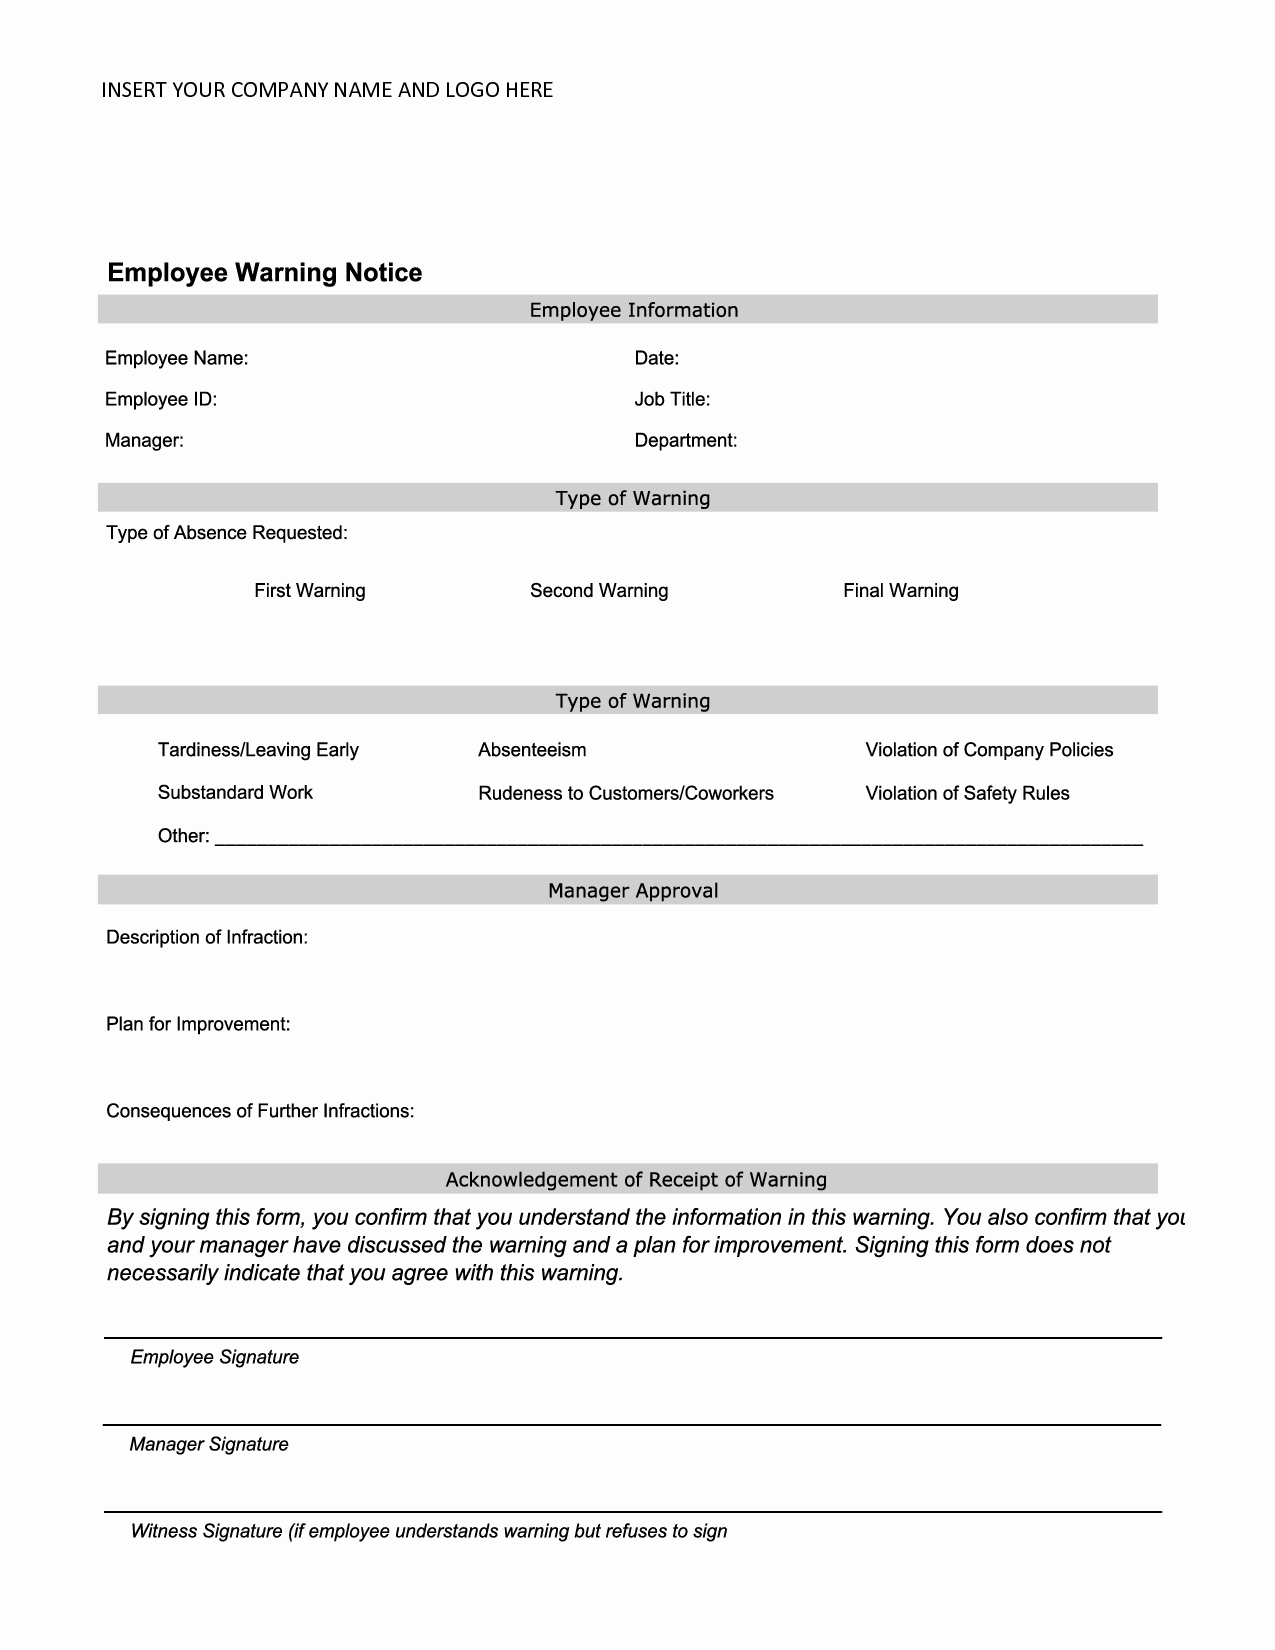 Employee Warning Notice Employee forms